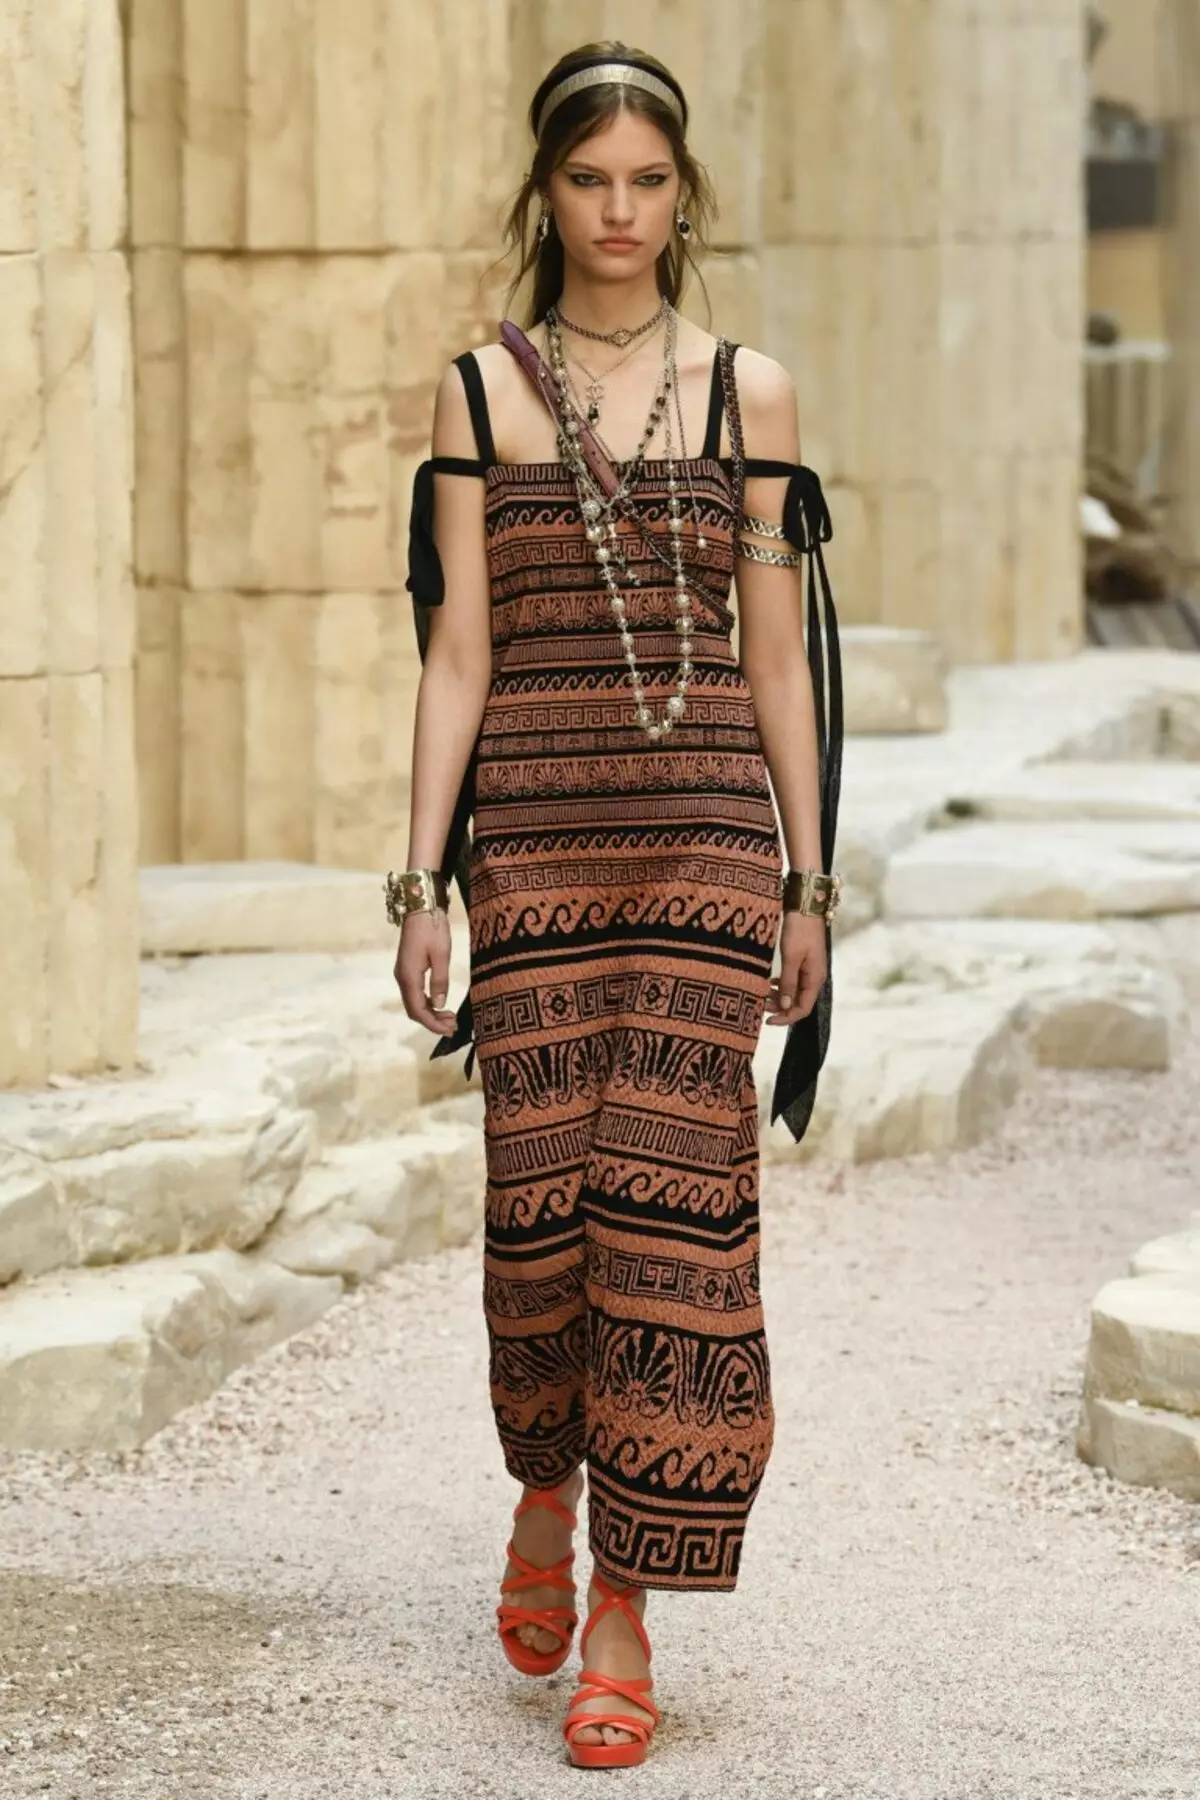 Coco Chanel სტილის ფოტო ტანსაცმელი (82 ფოტო): თვისებები და დამახასიათებელი თვისებები 3677_26